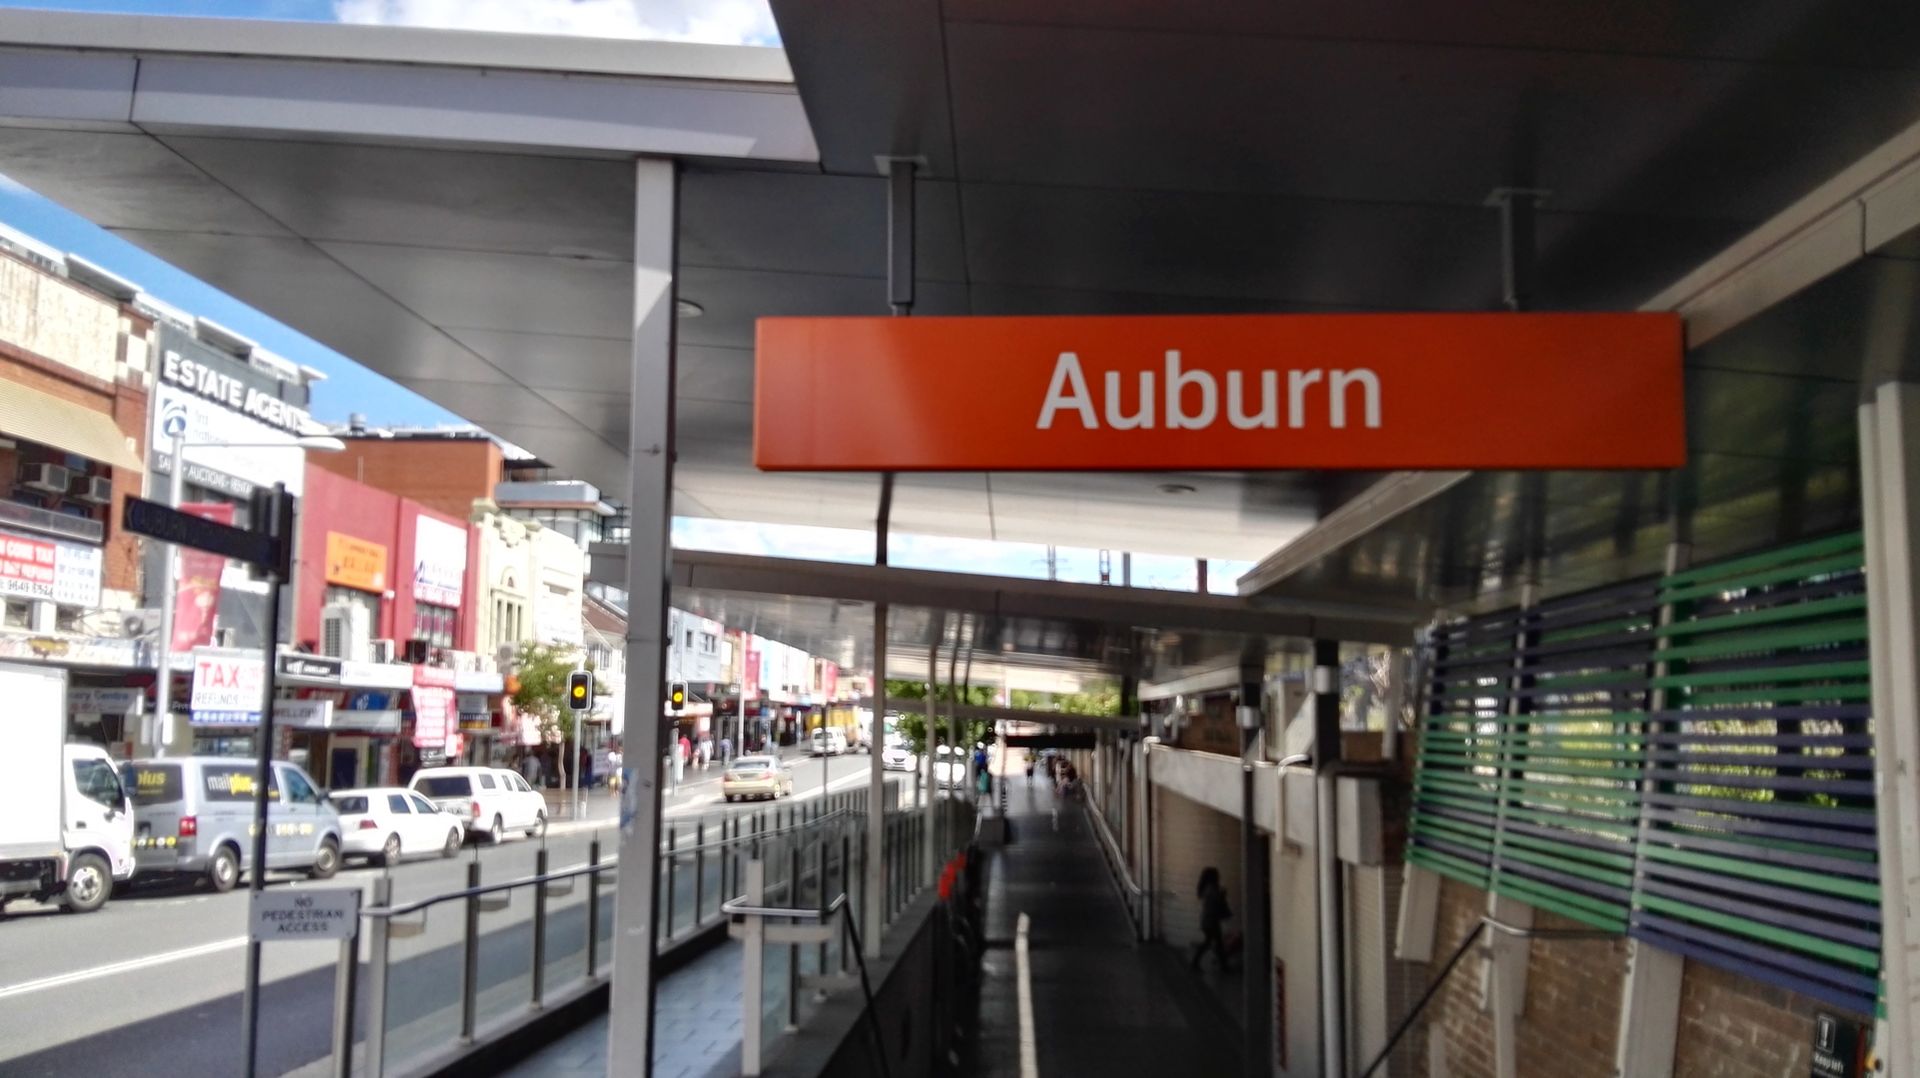 22-30 Station Road, Auburn NSW 2144, Australia, Auburn NSW 2144, Image 2